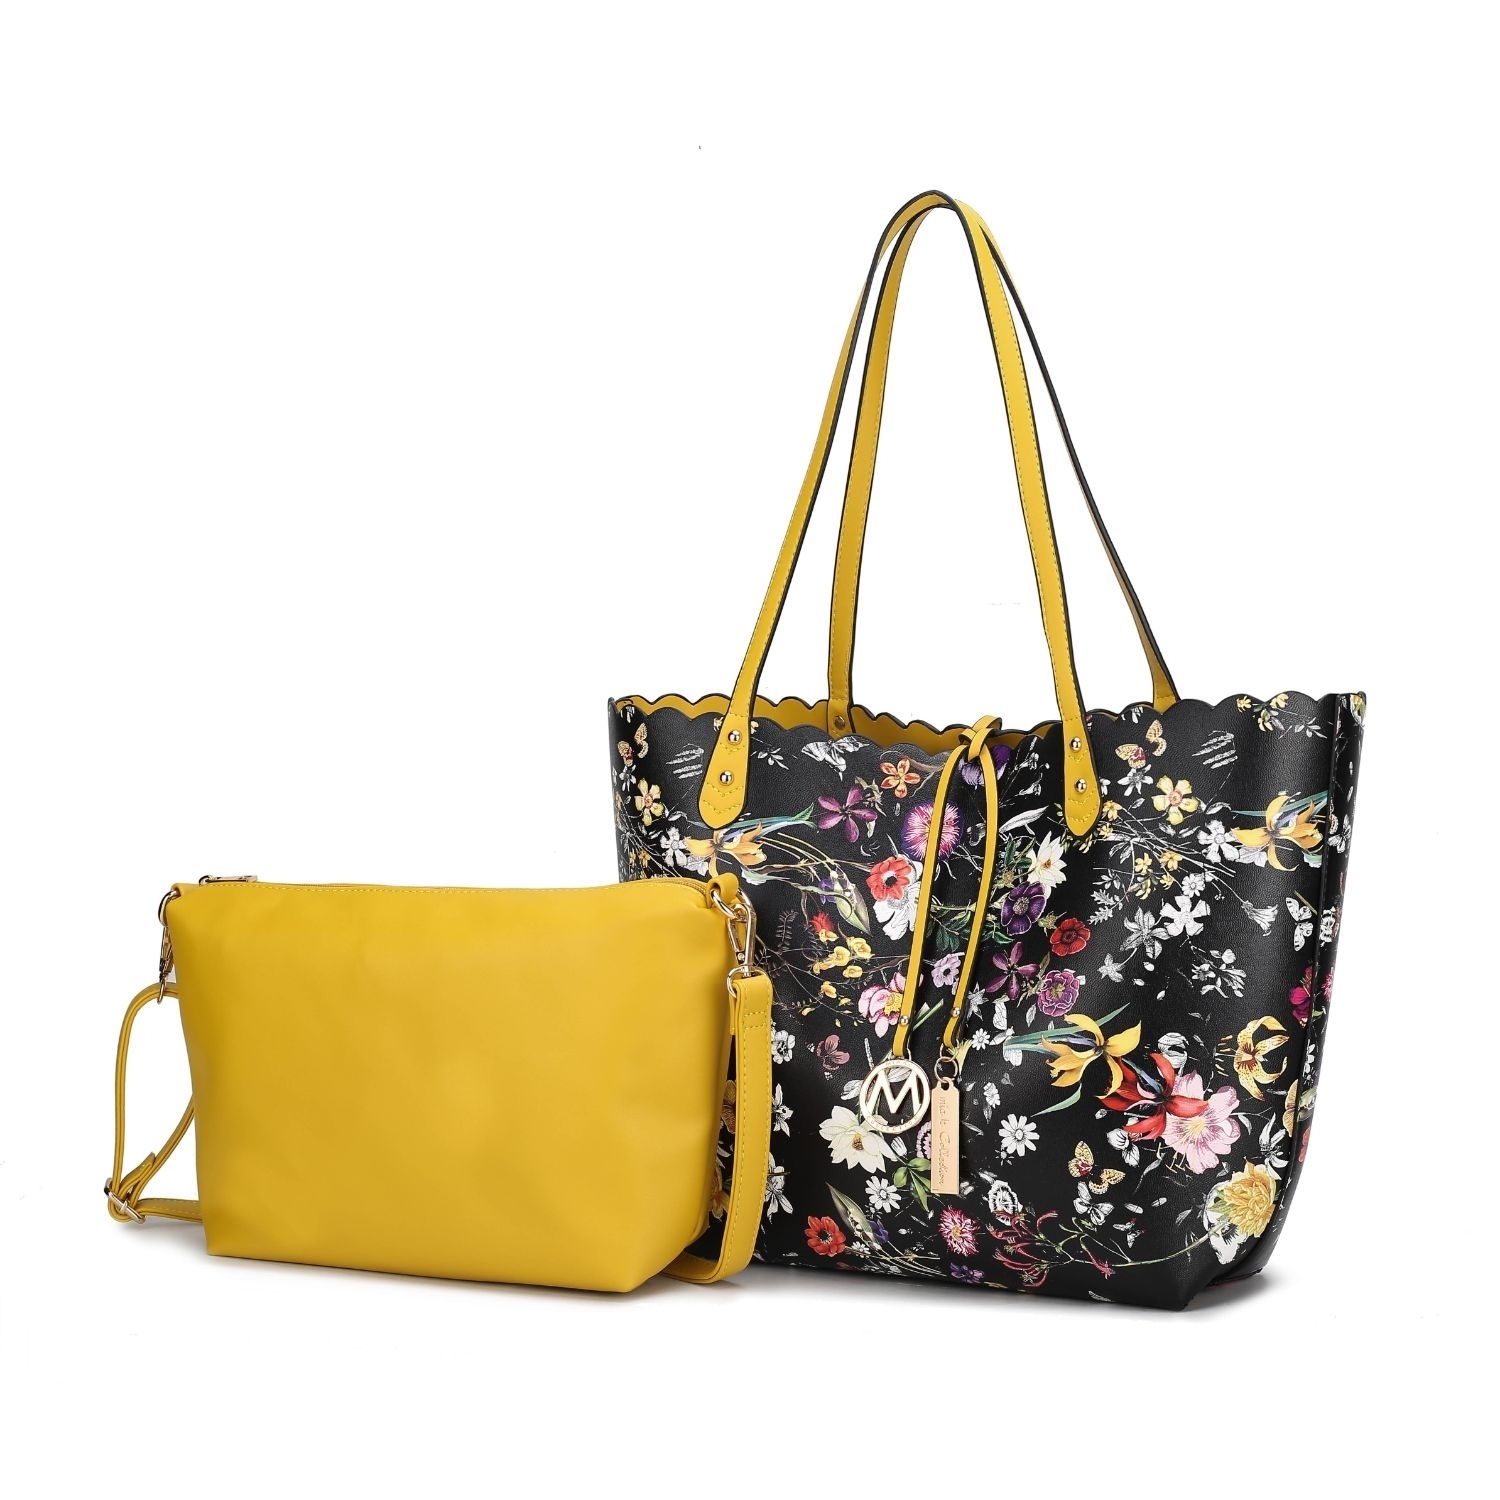 MKF Collection Danielle Reversible Shopper Tote Handbag Crossbody Pouch By Mia K 2 Pieces - Grey Black